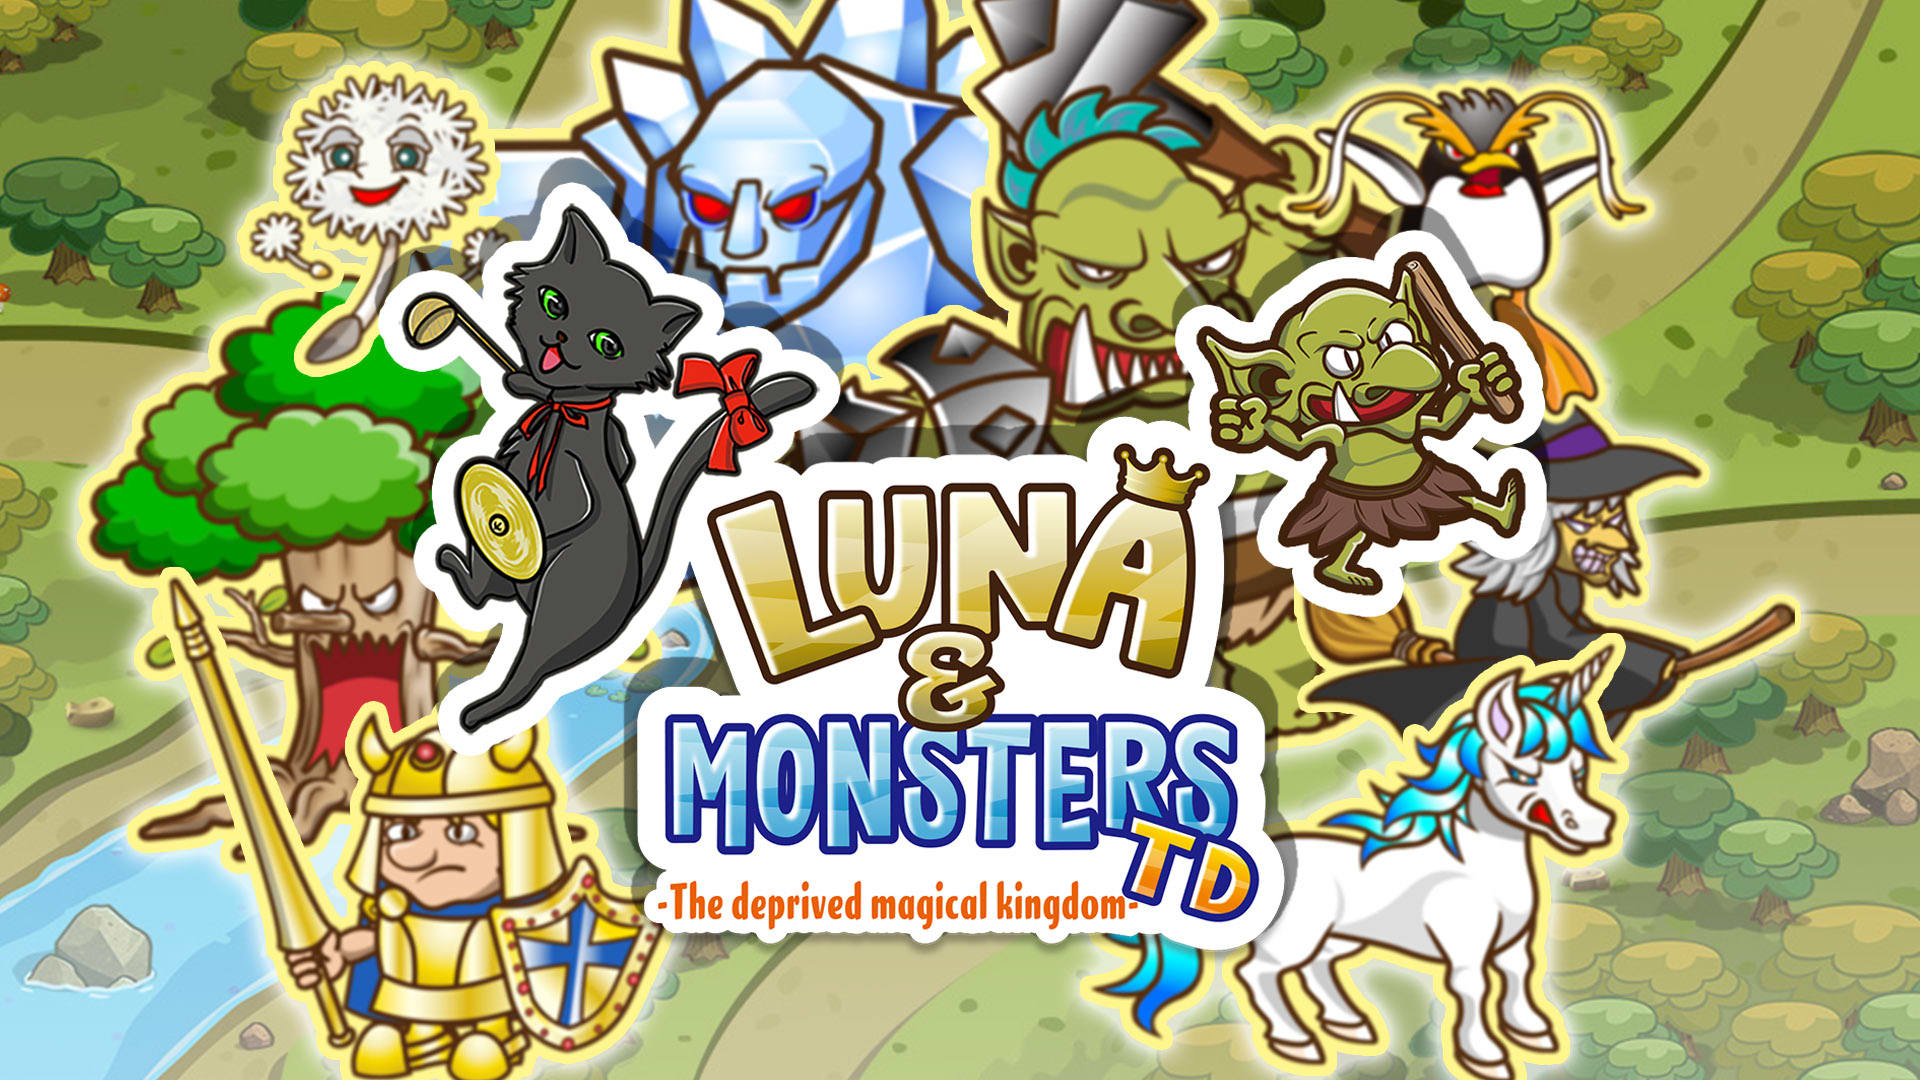 Luna & Monsters Tower Defense -The deprived magical kingdom-